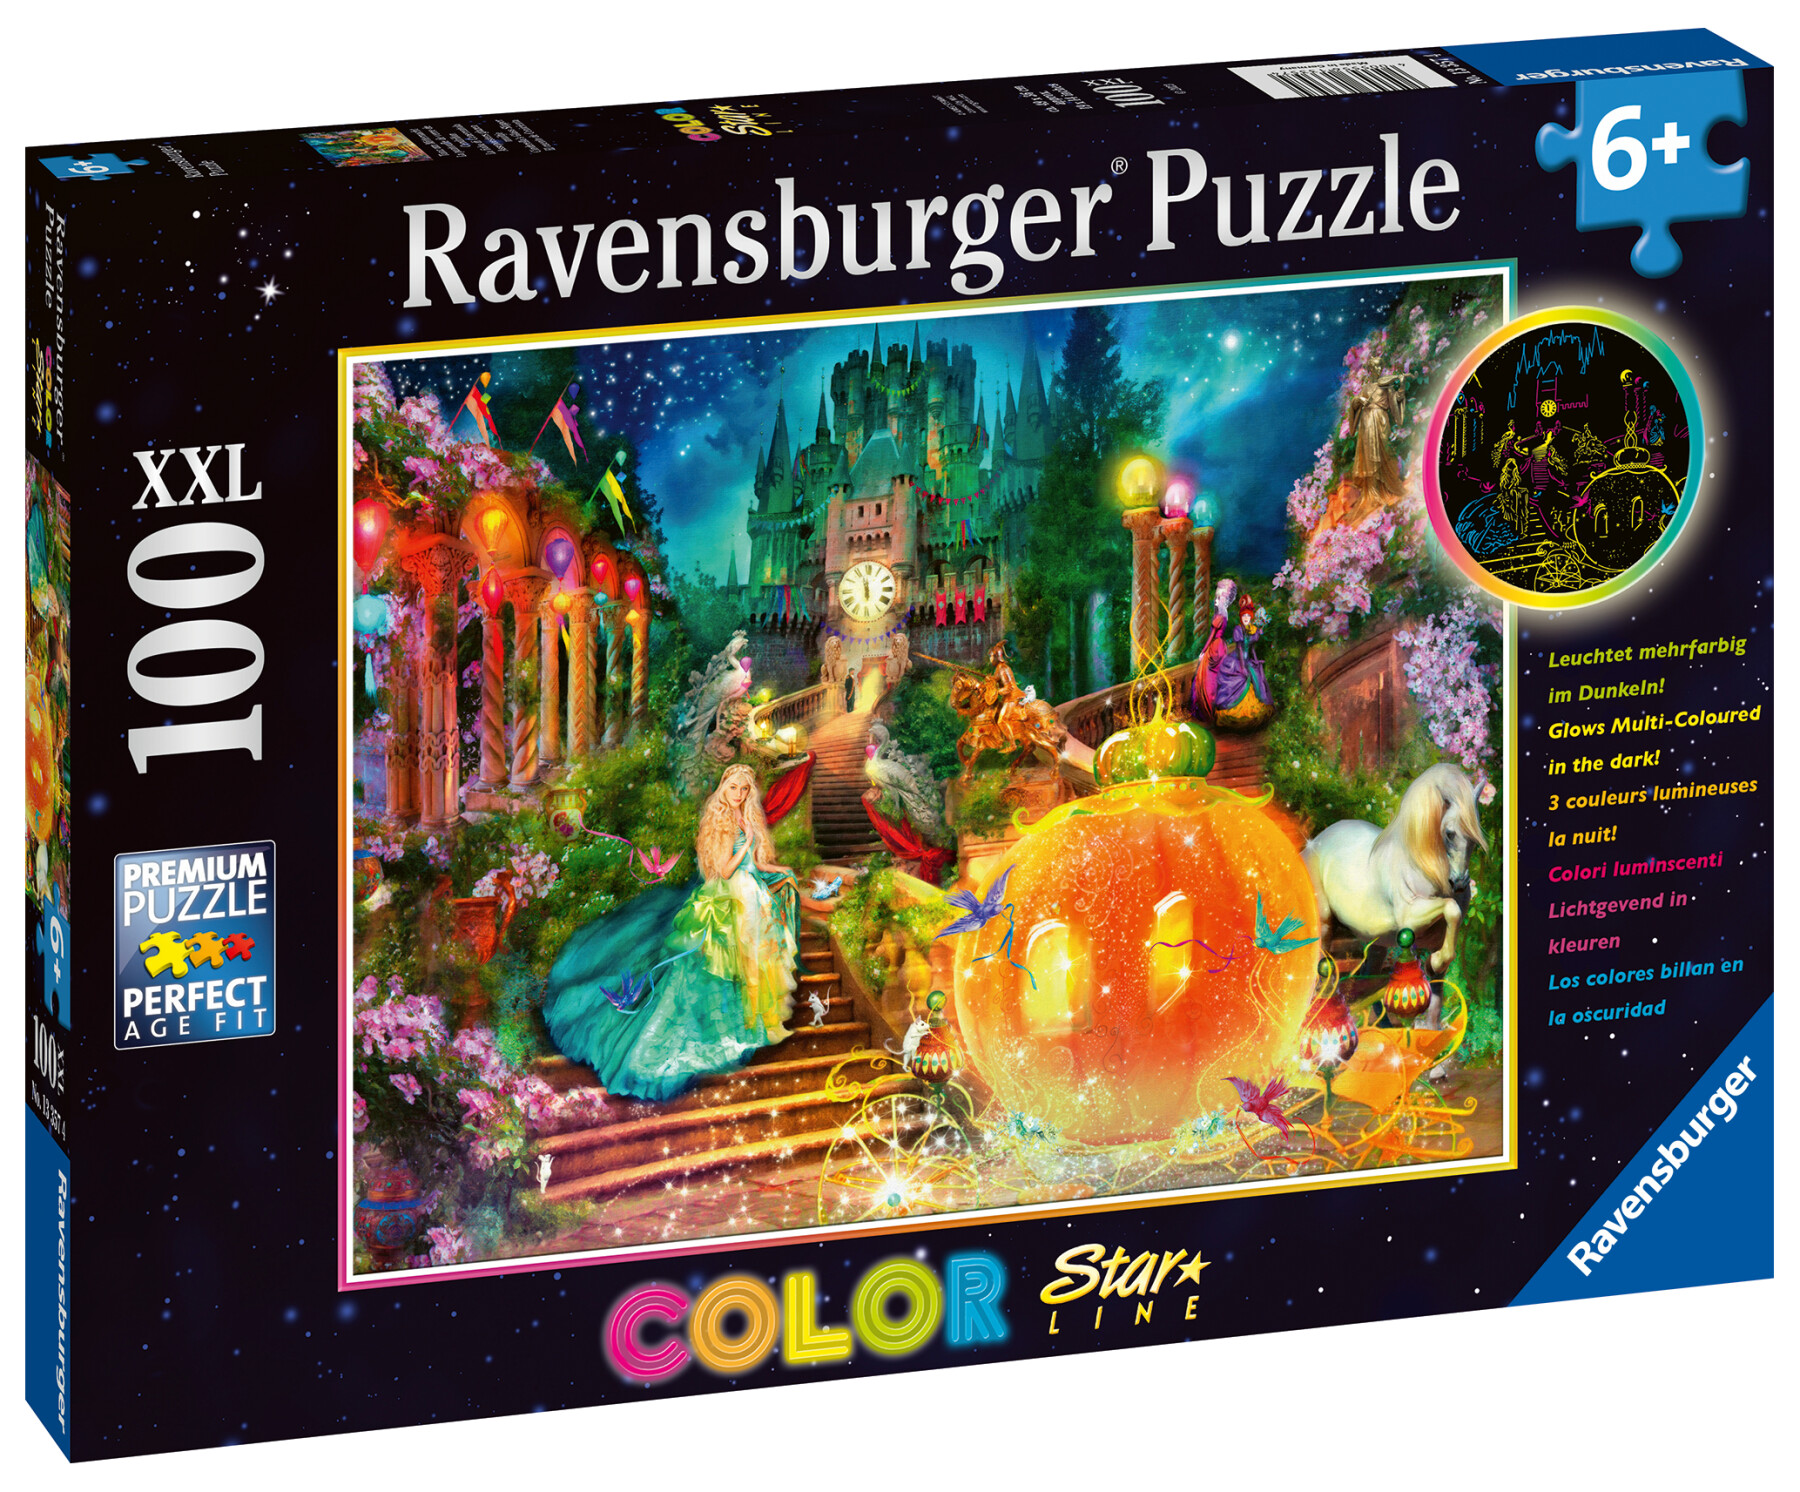 Ravensburger - puzzle cenerentola, 100 pezzi xxl, età raccomandata 6+ anni - DISNEY PRINCESS, RAVENSBURGER